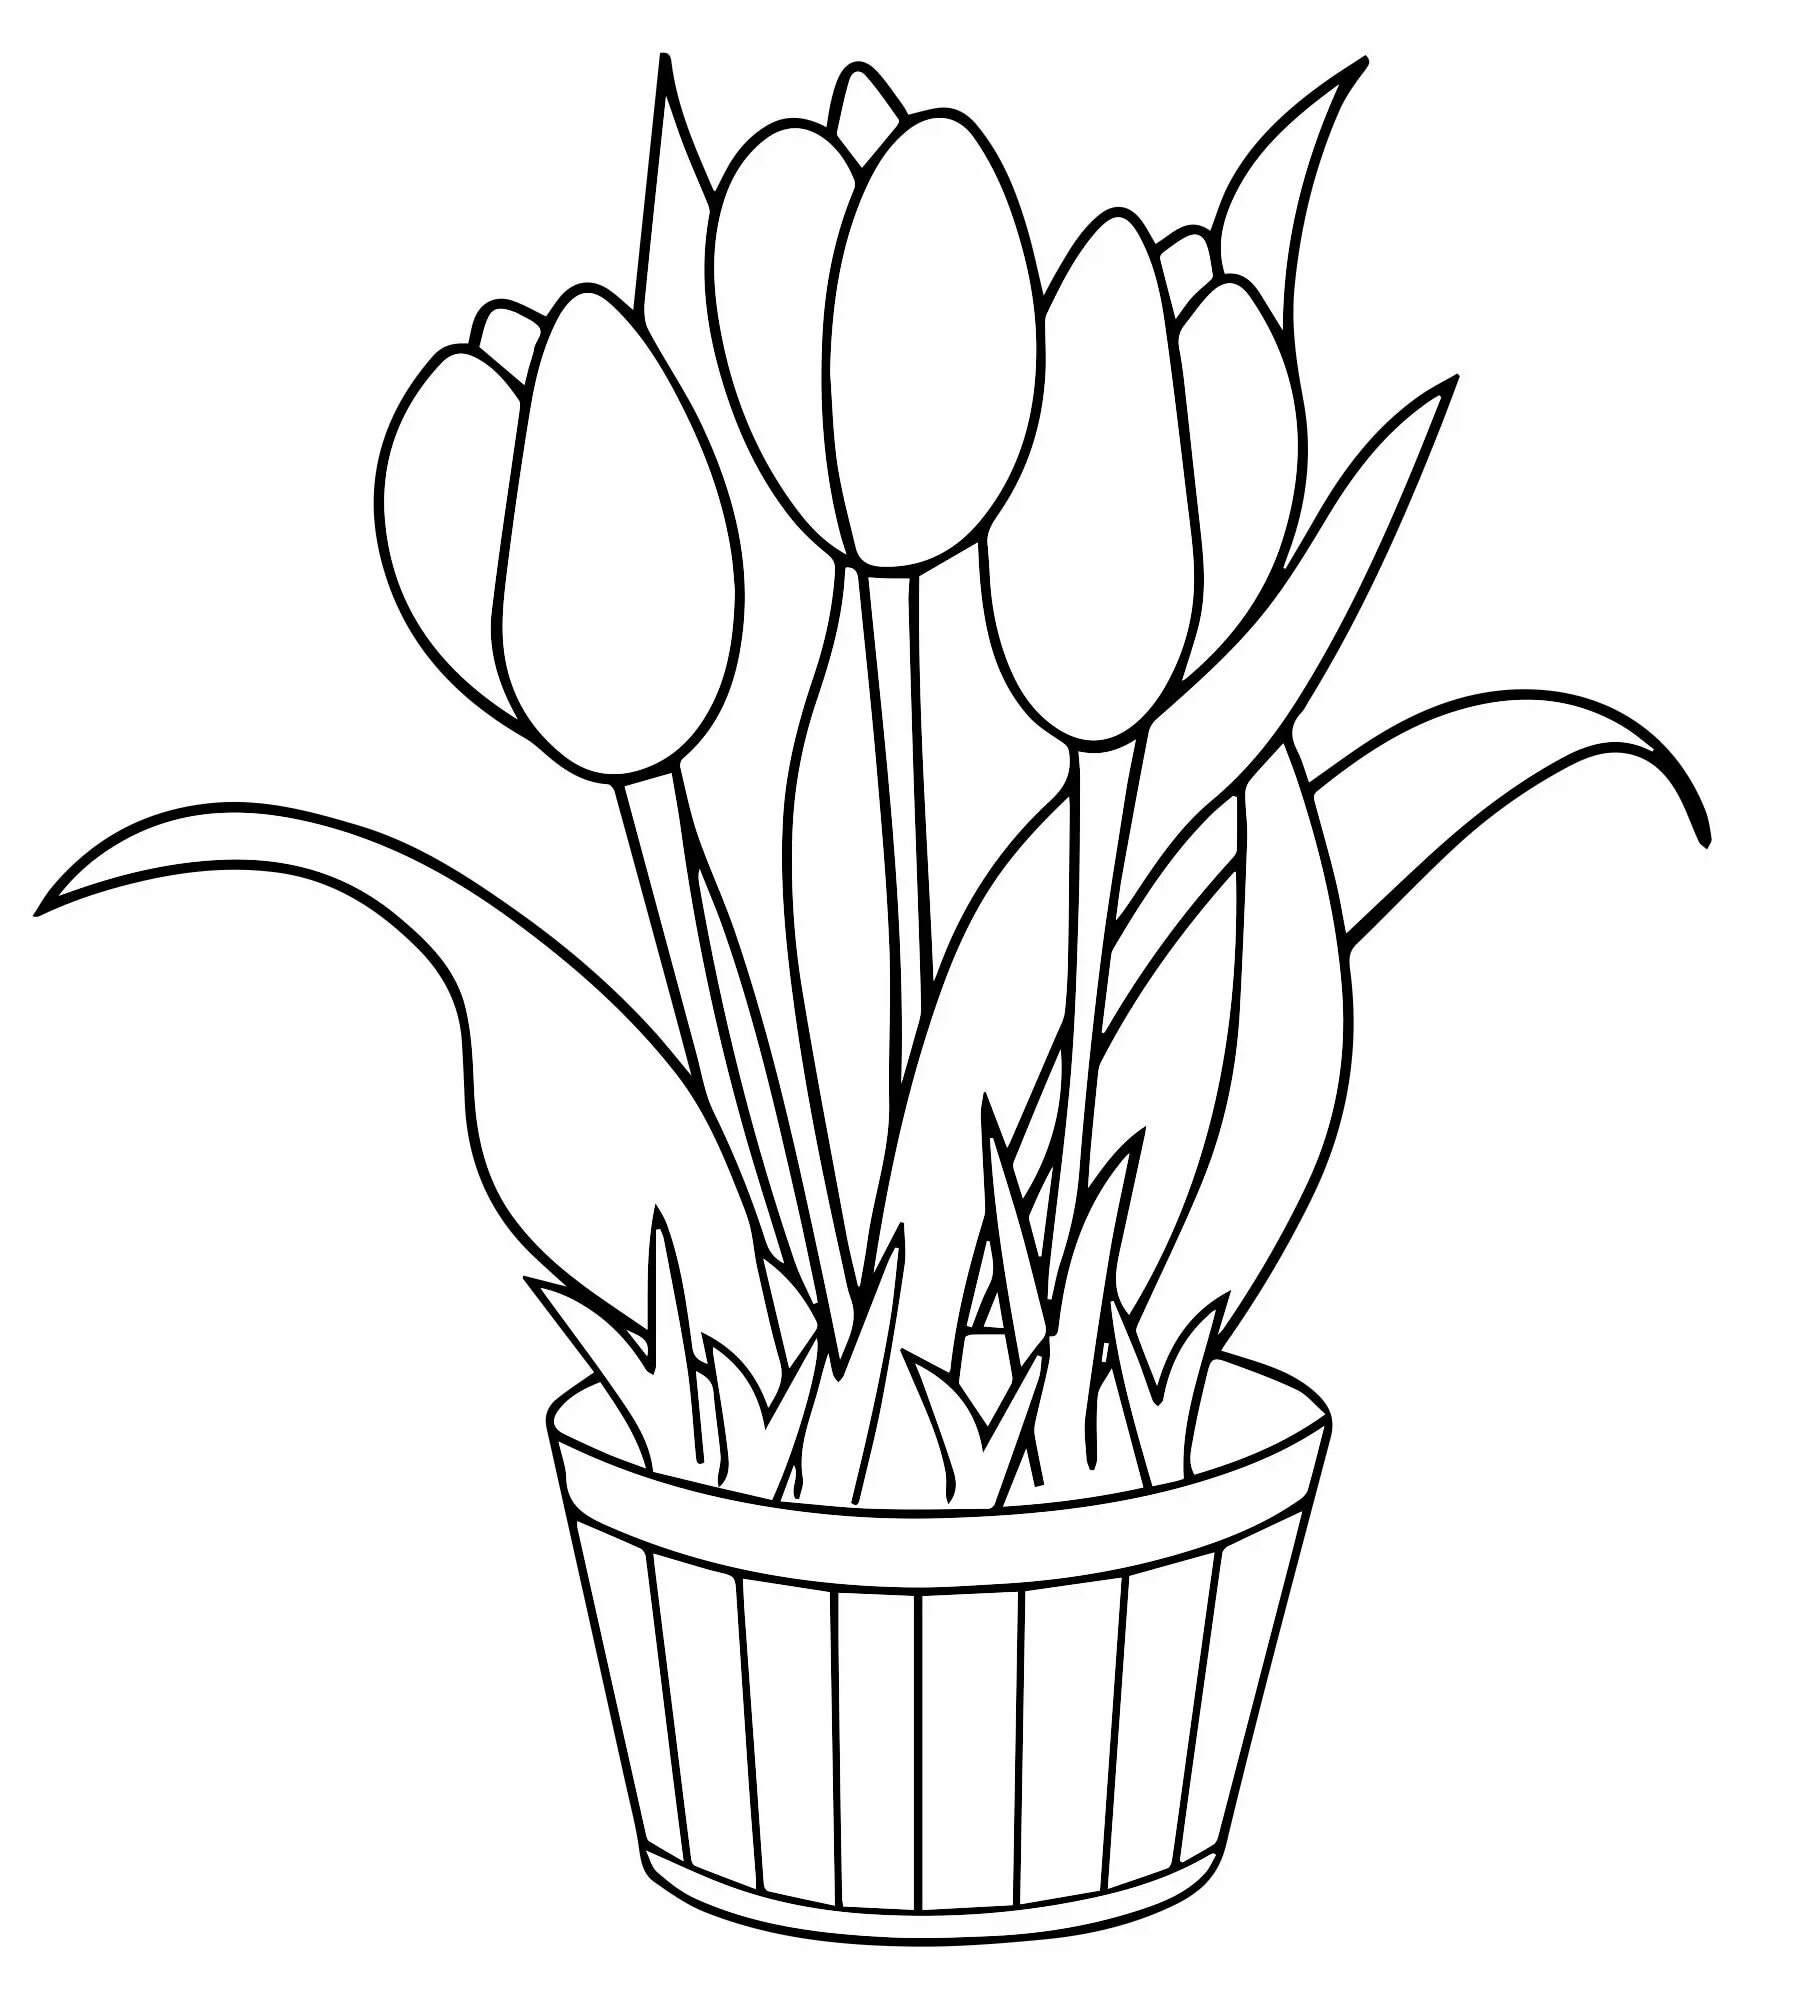 Joyful tulips coloring for kids